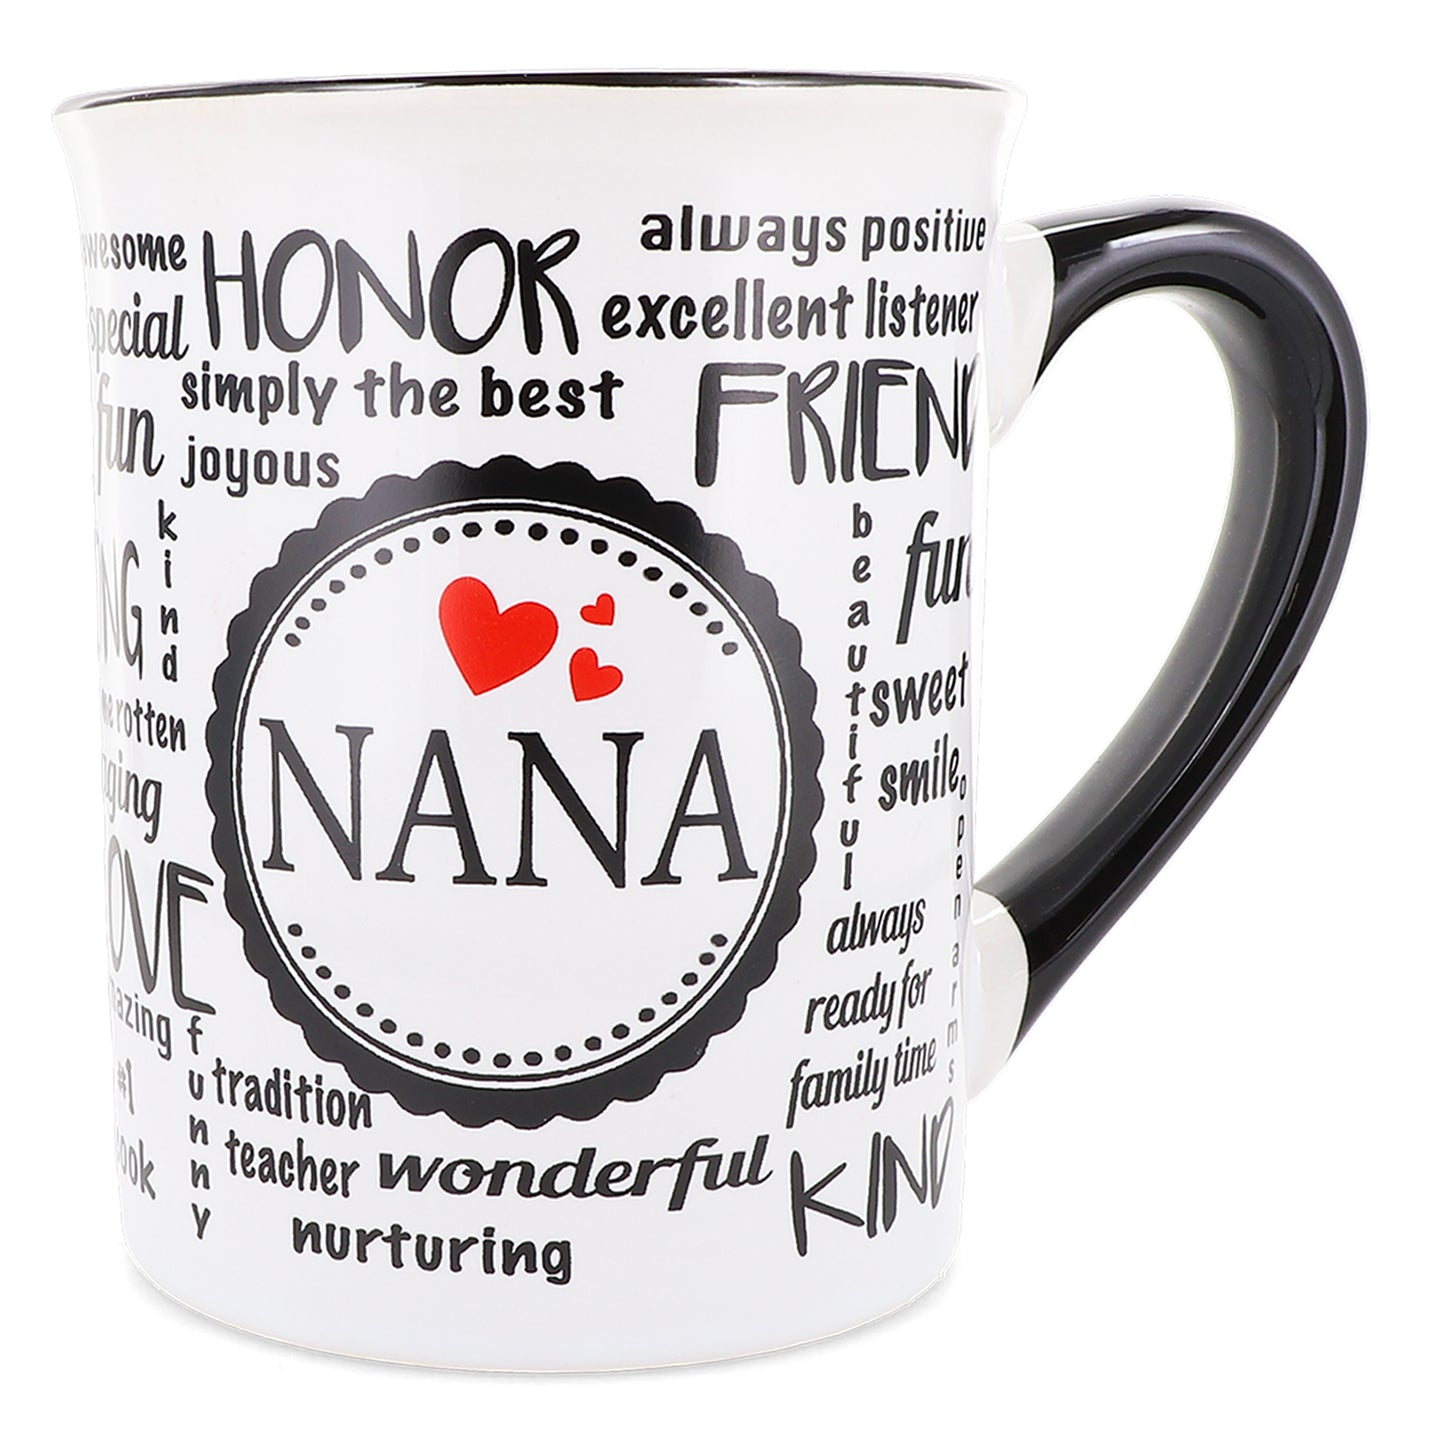 Cottage Creek Nana Mug, Nana Coffee Mug, Ceramic, 16oz., 6" Multicolored